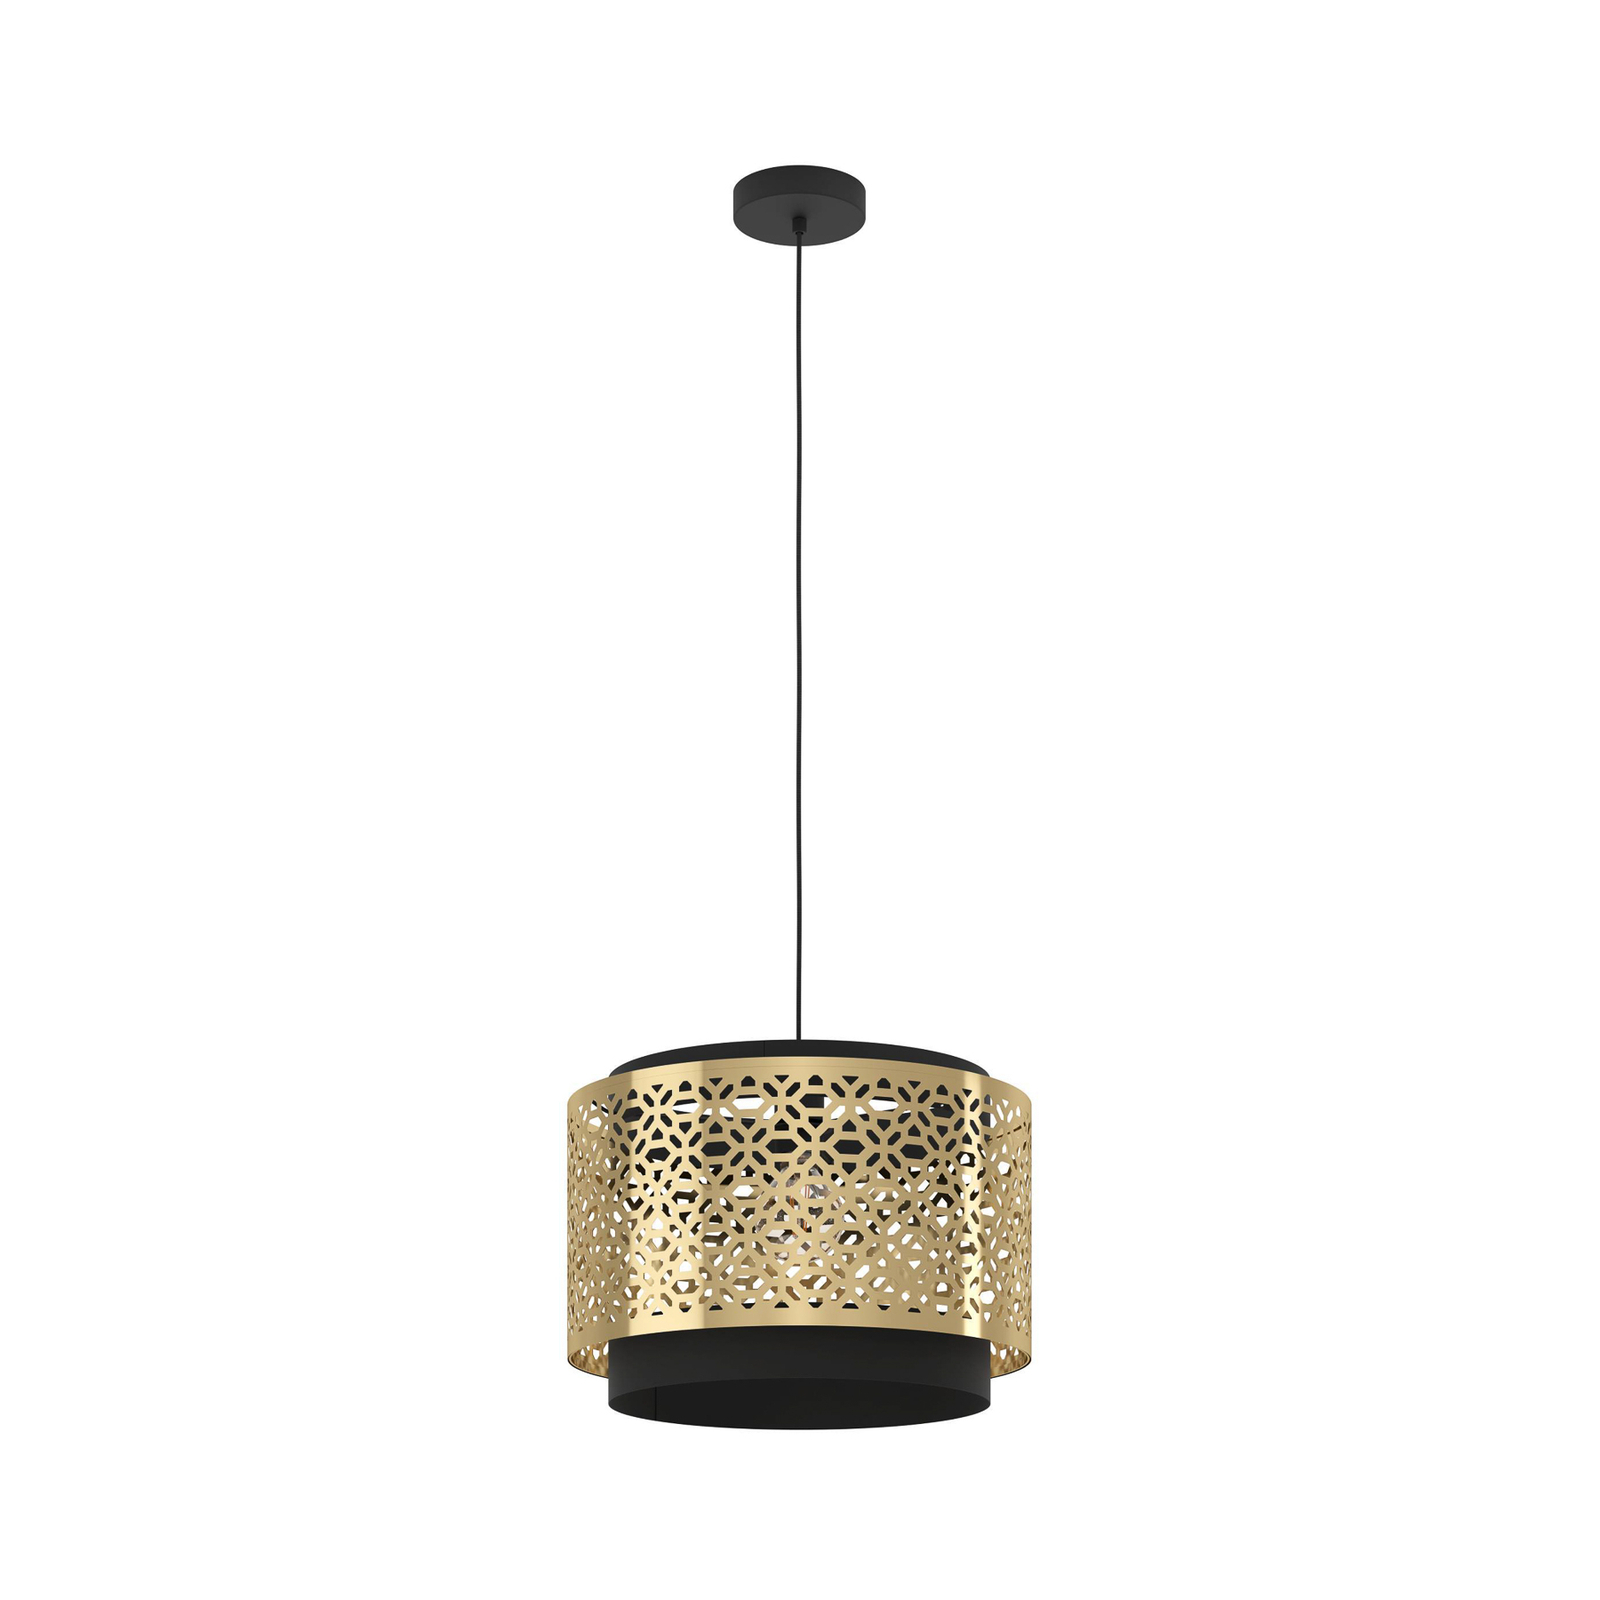 Sandbach pendant light in black and brass